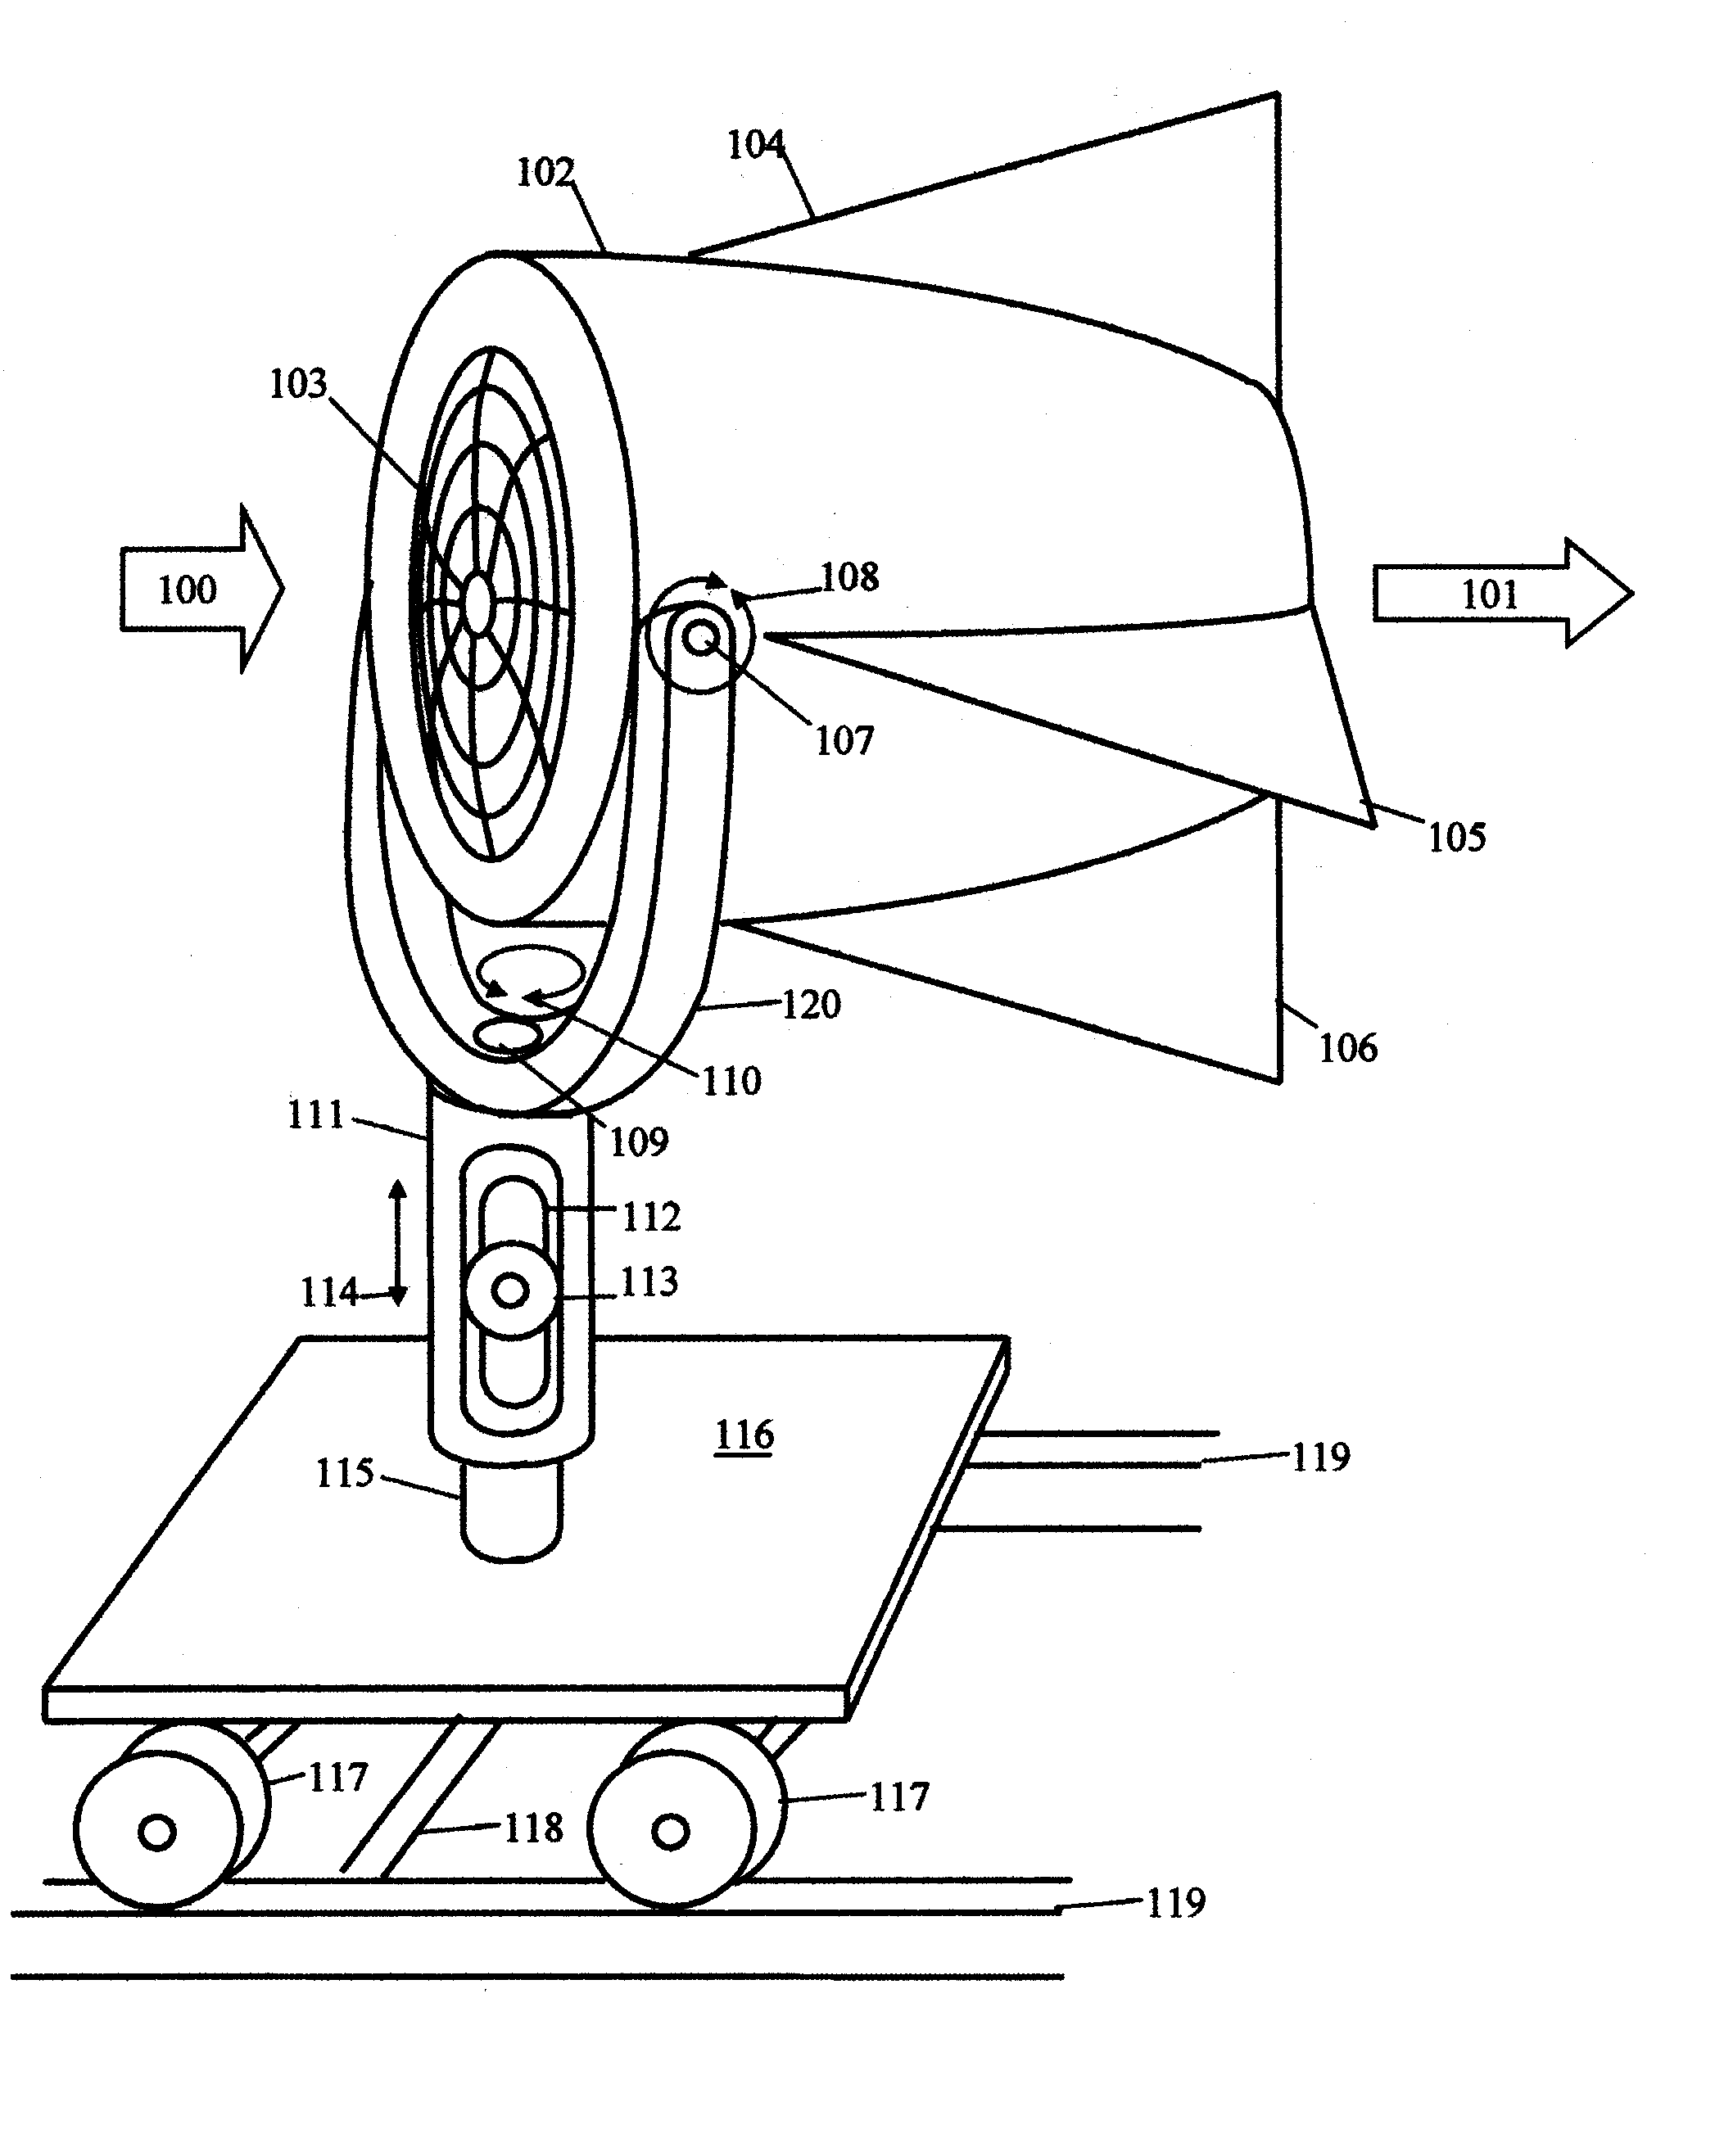 Gimbal-mounted hydroelectric turbine